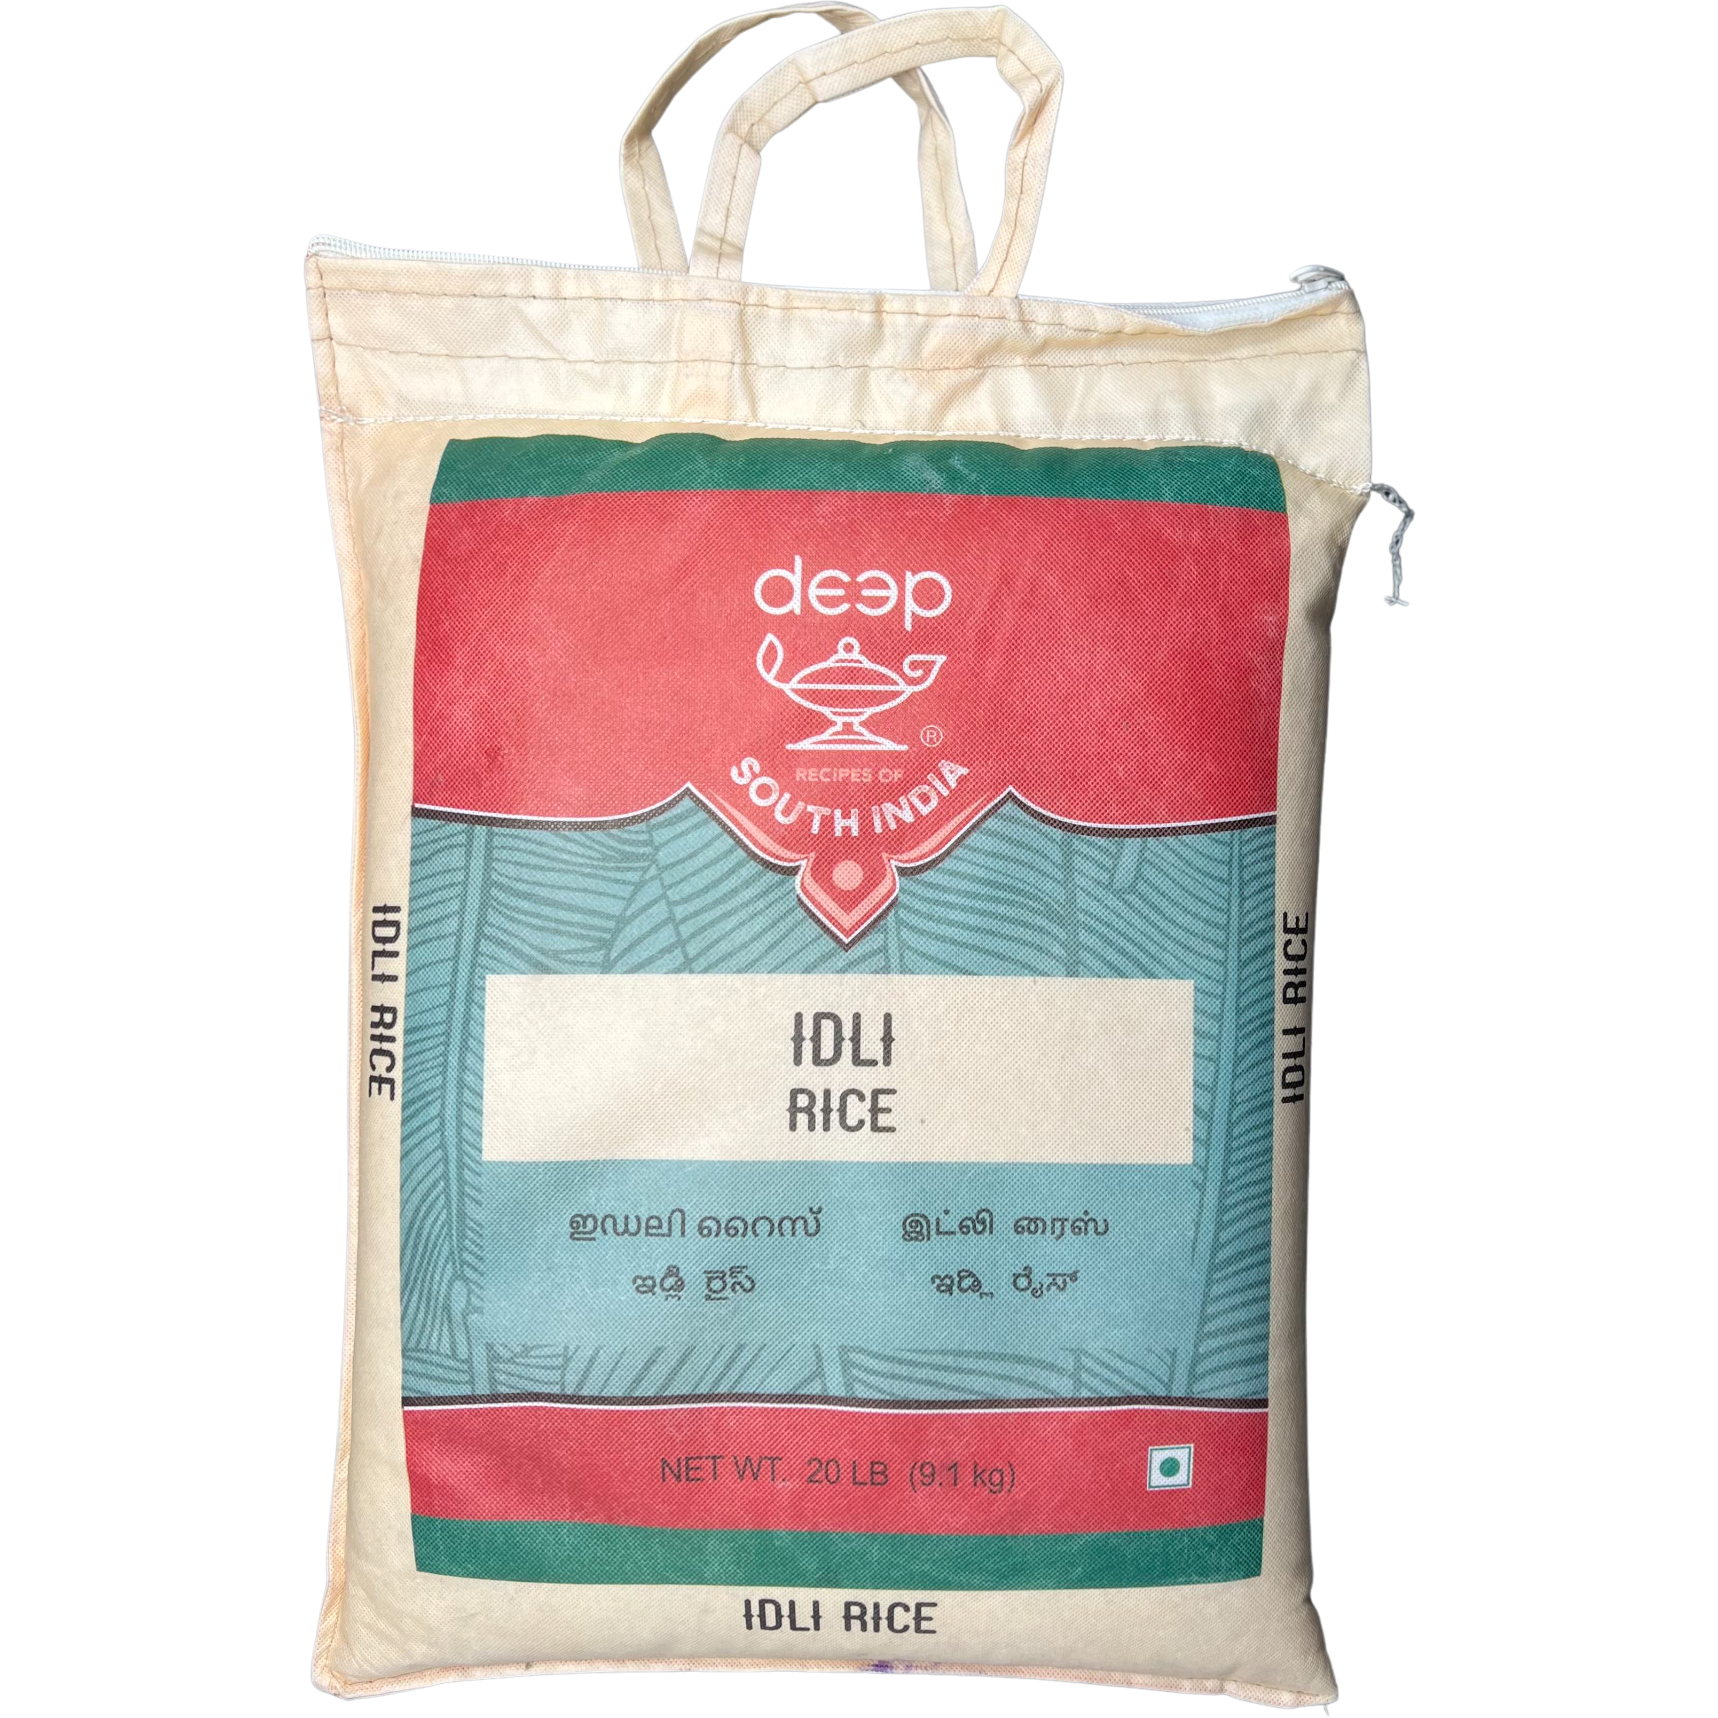 Deep Idli Rice - 9.1 Kg (20 Lb)